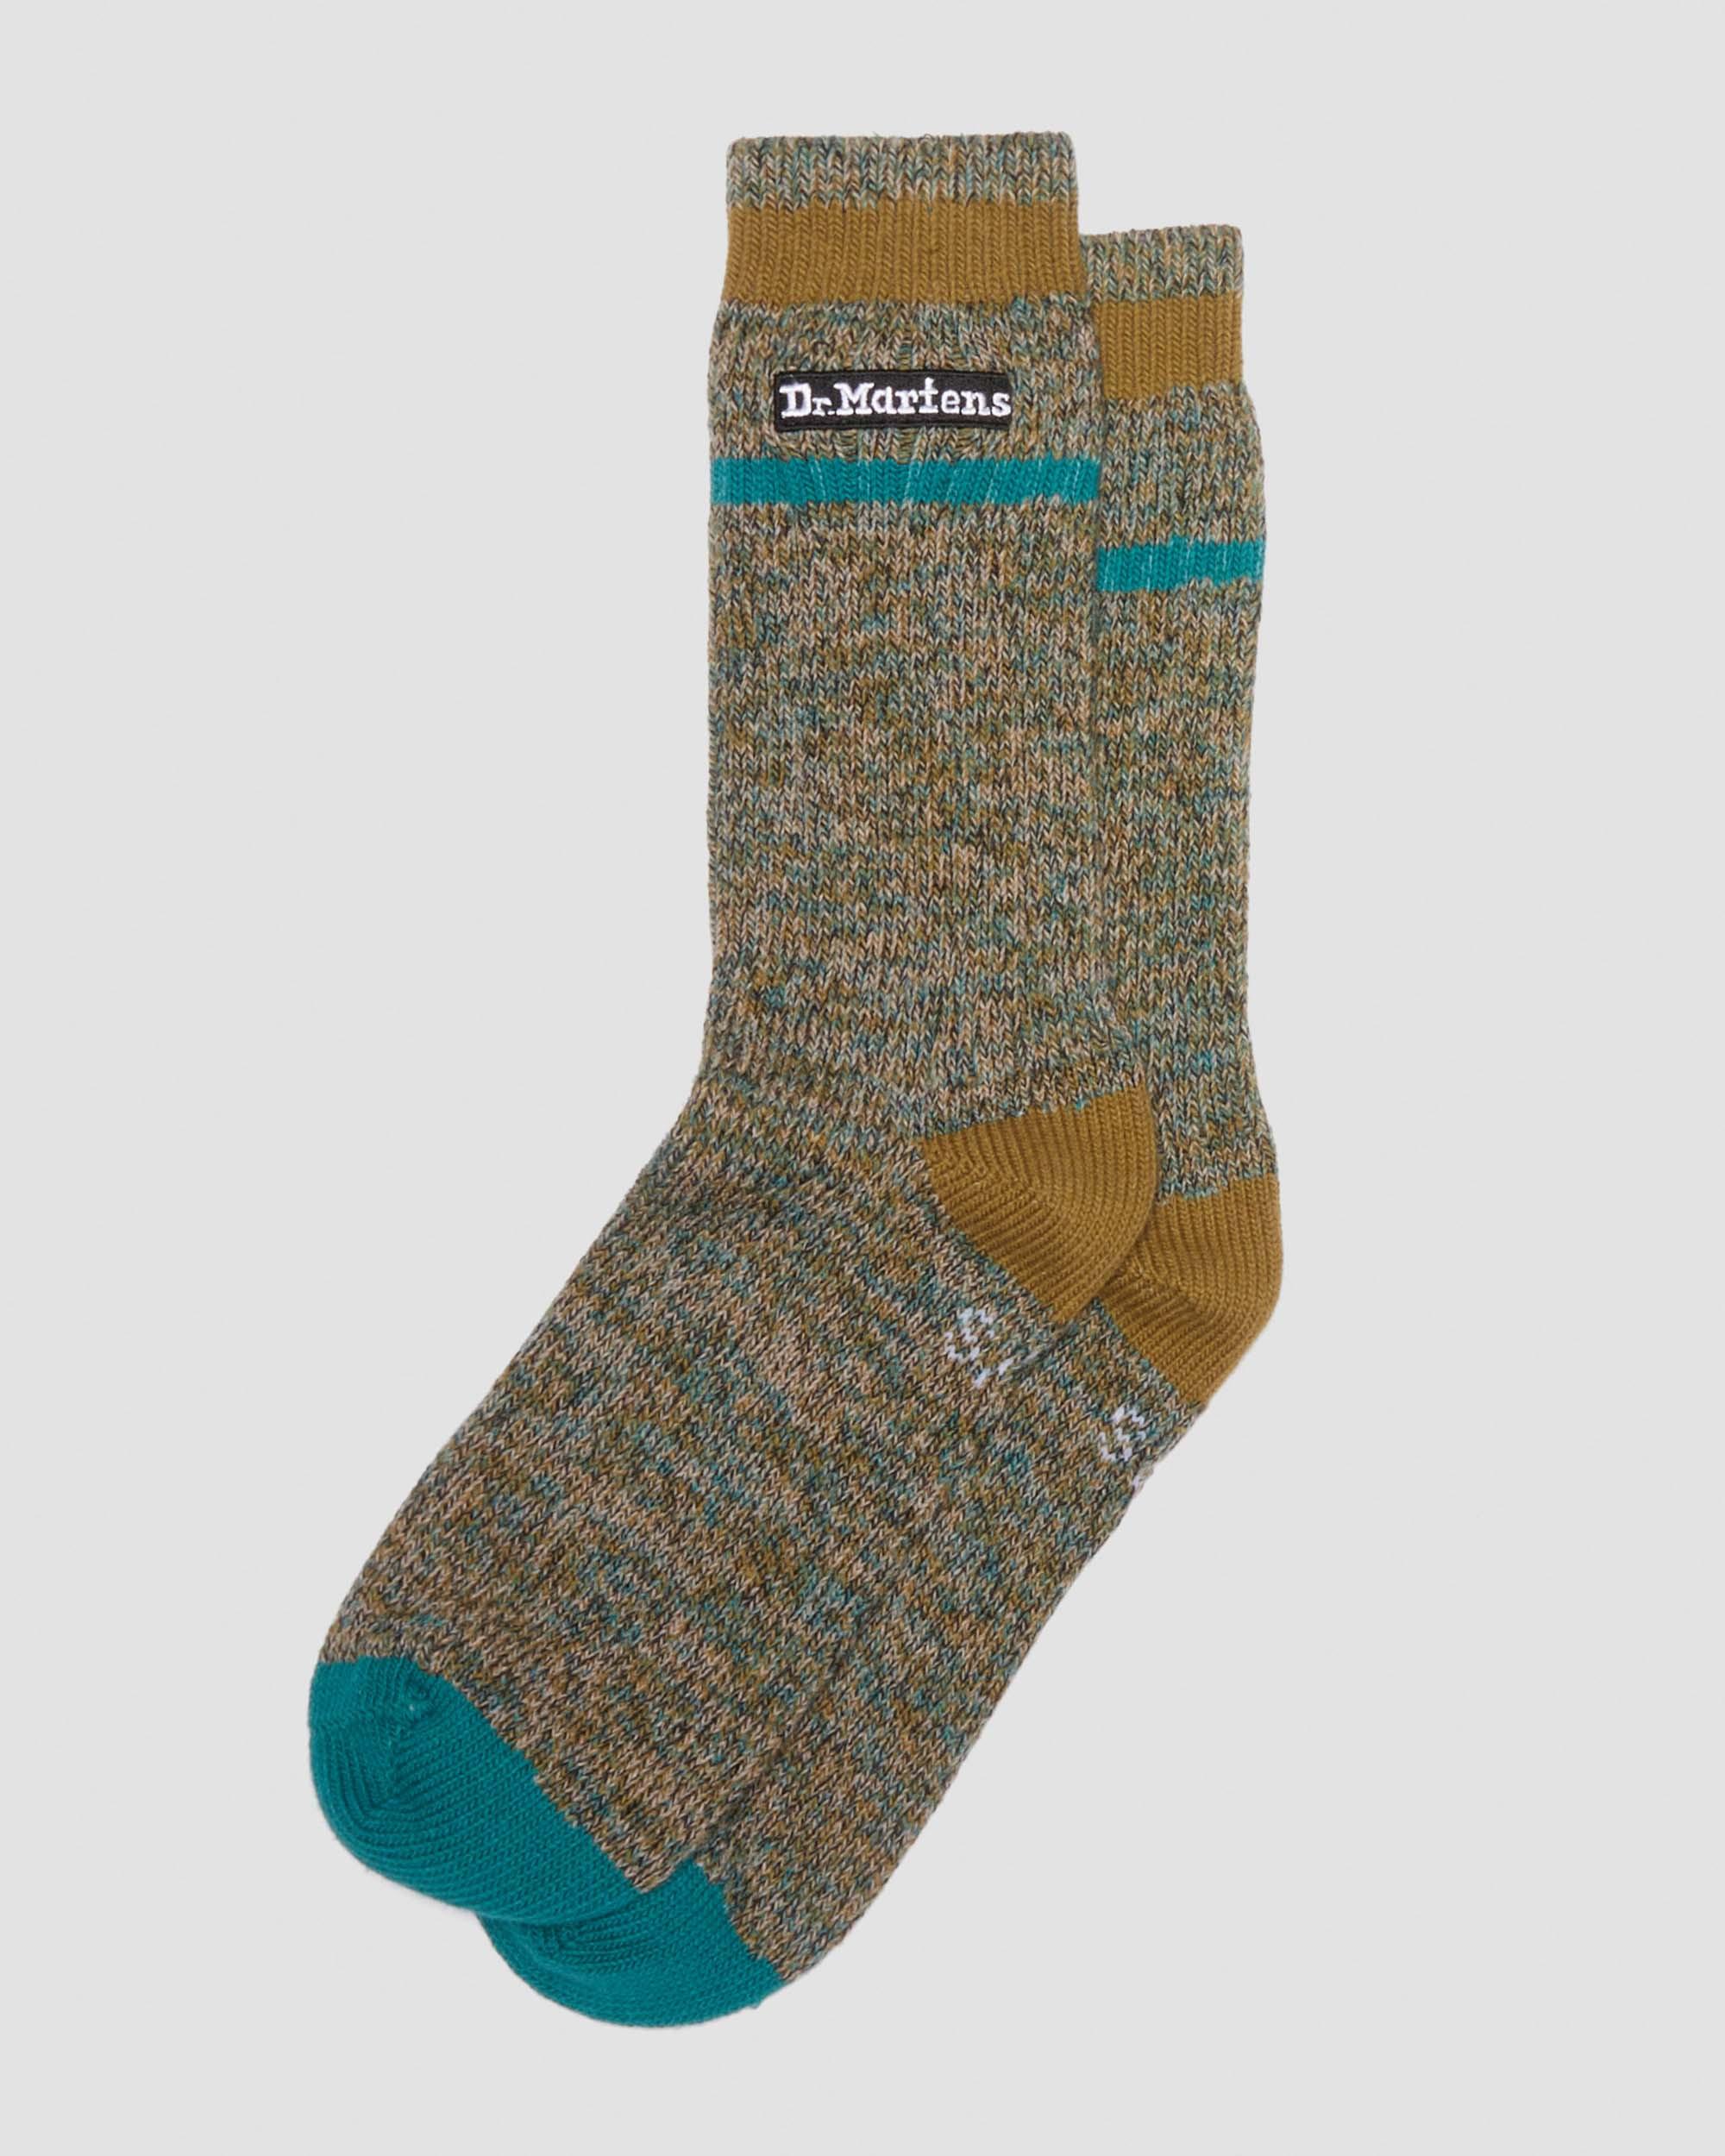 Marl Organic Socks in Vintage Taupe | Dr. Martens